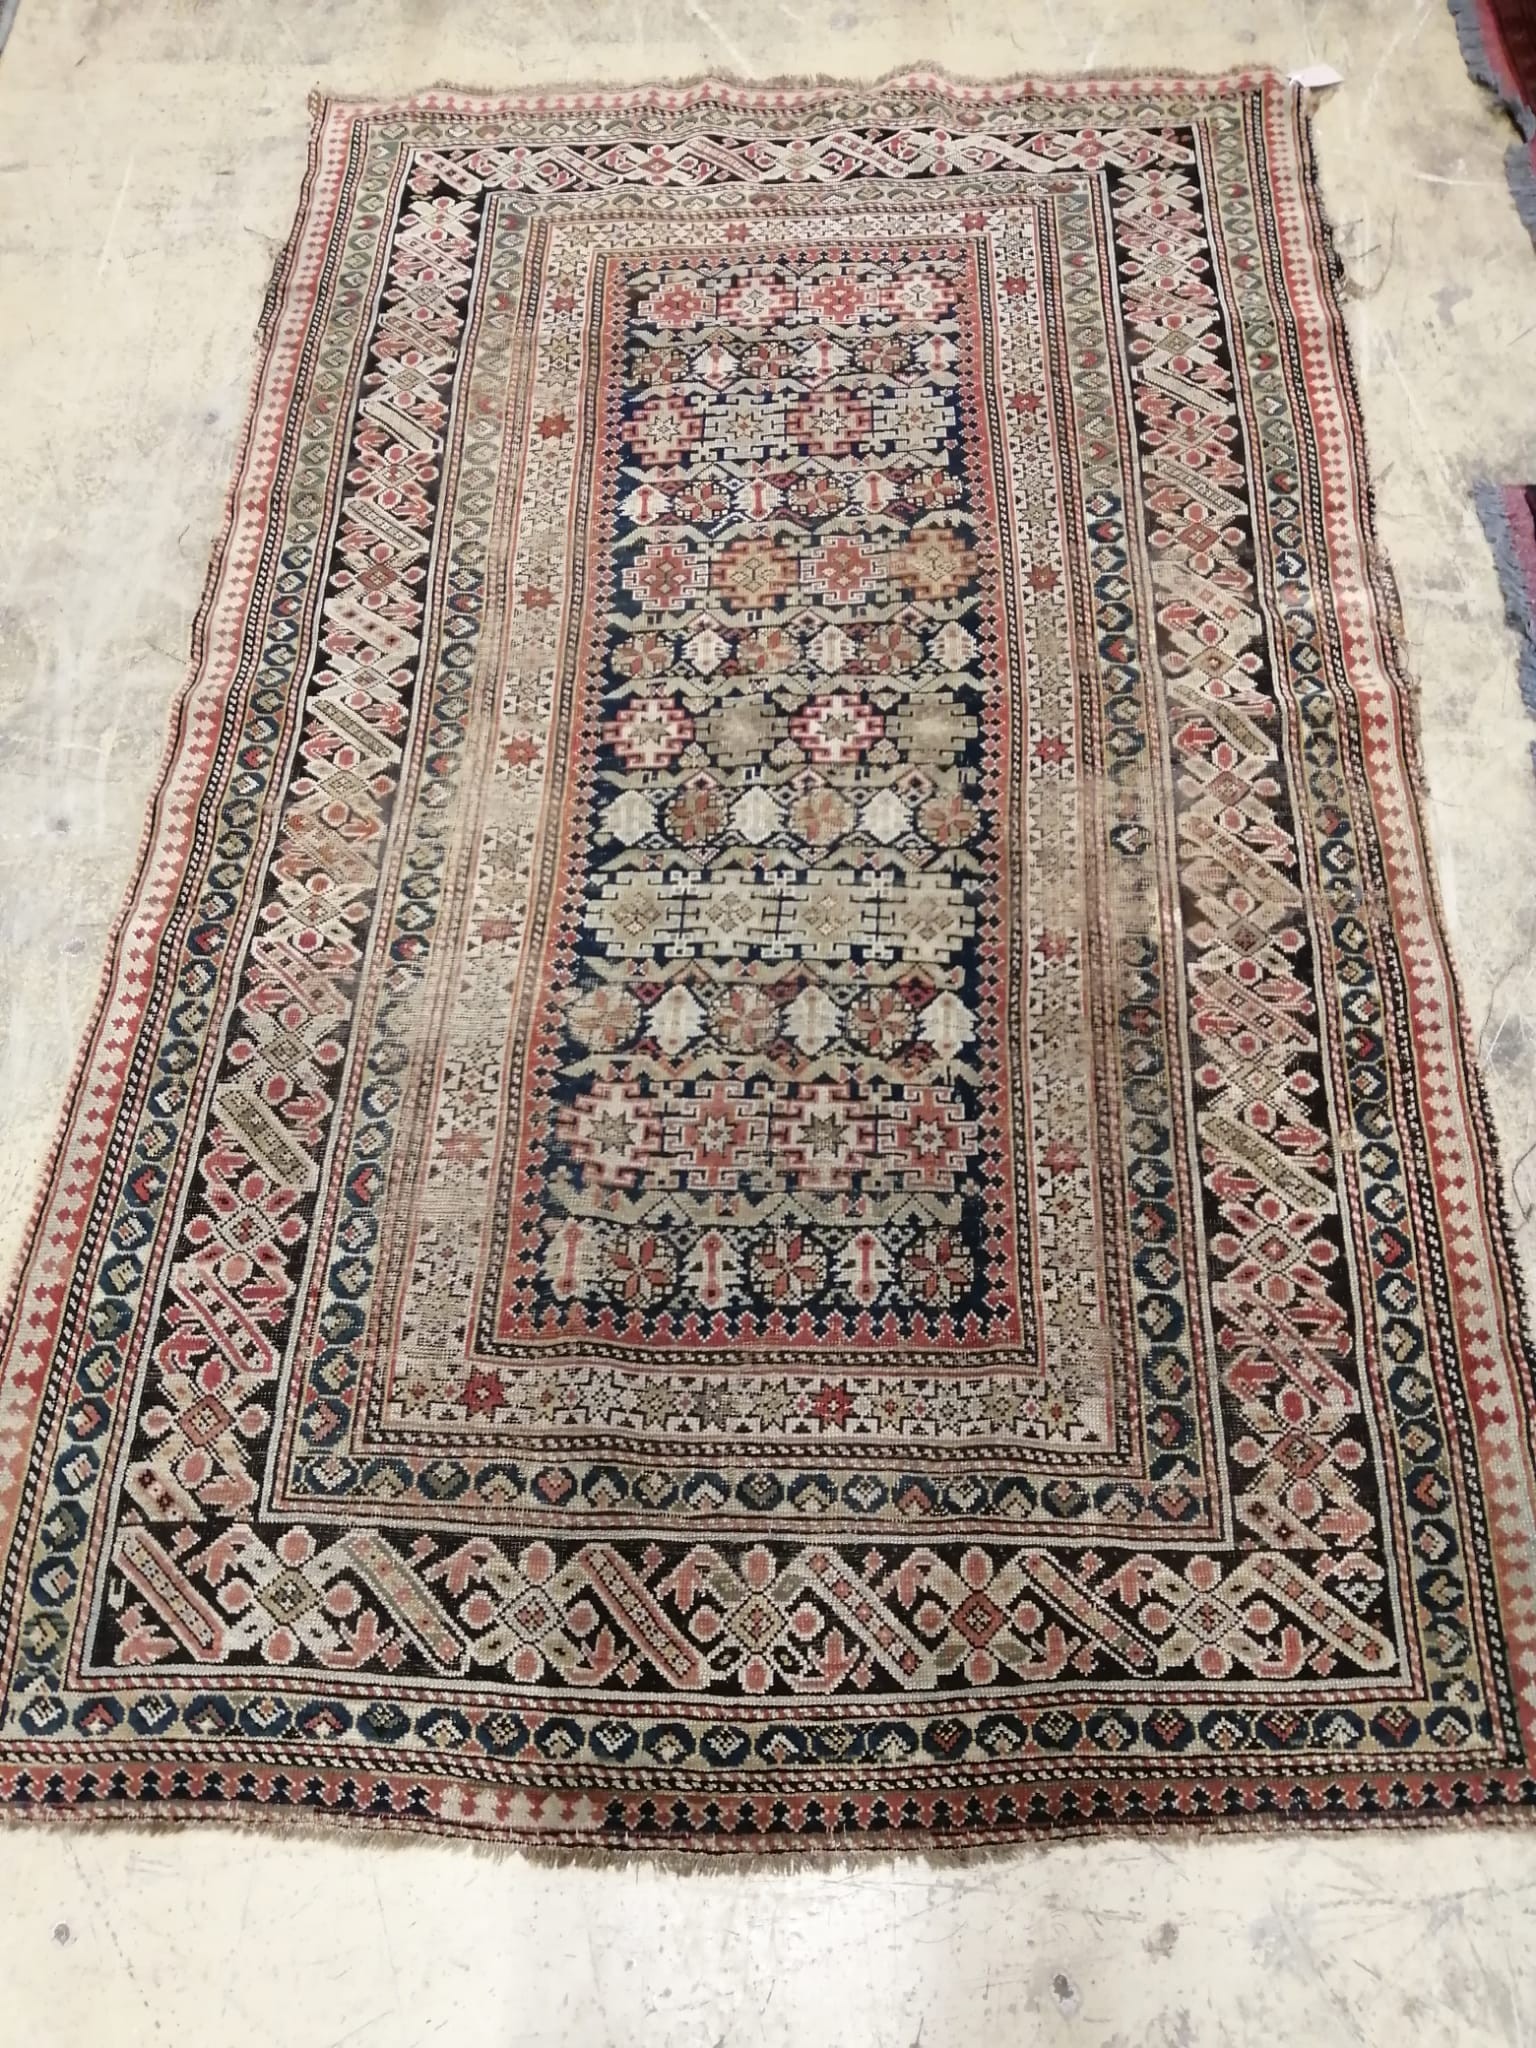 An antique Caucasian blue ground rug, 190 x 115cm